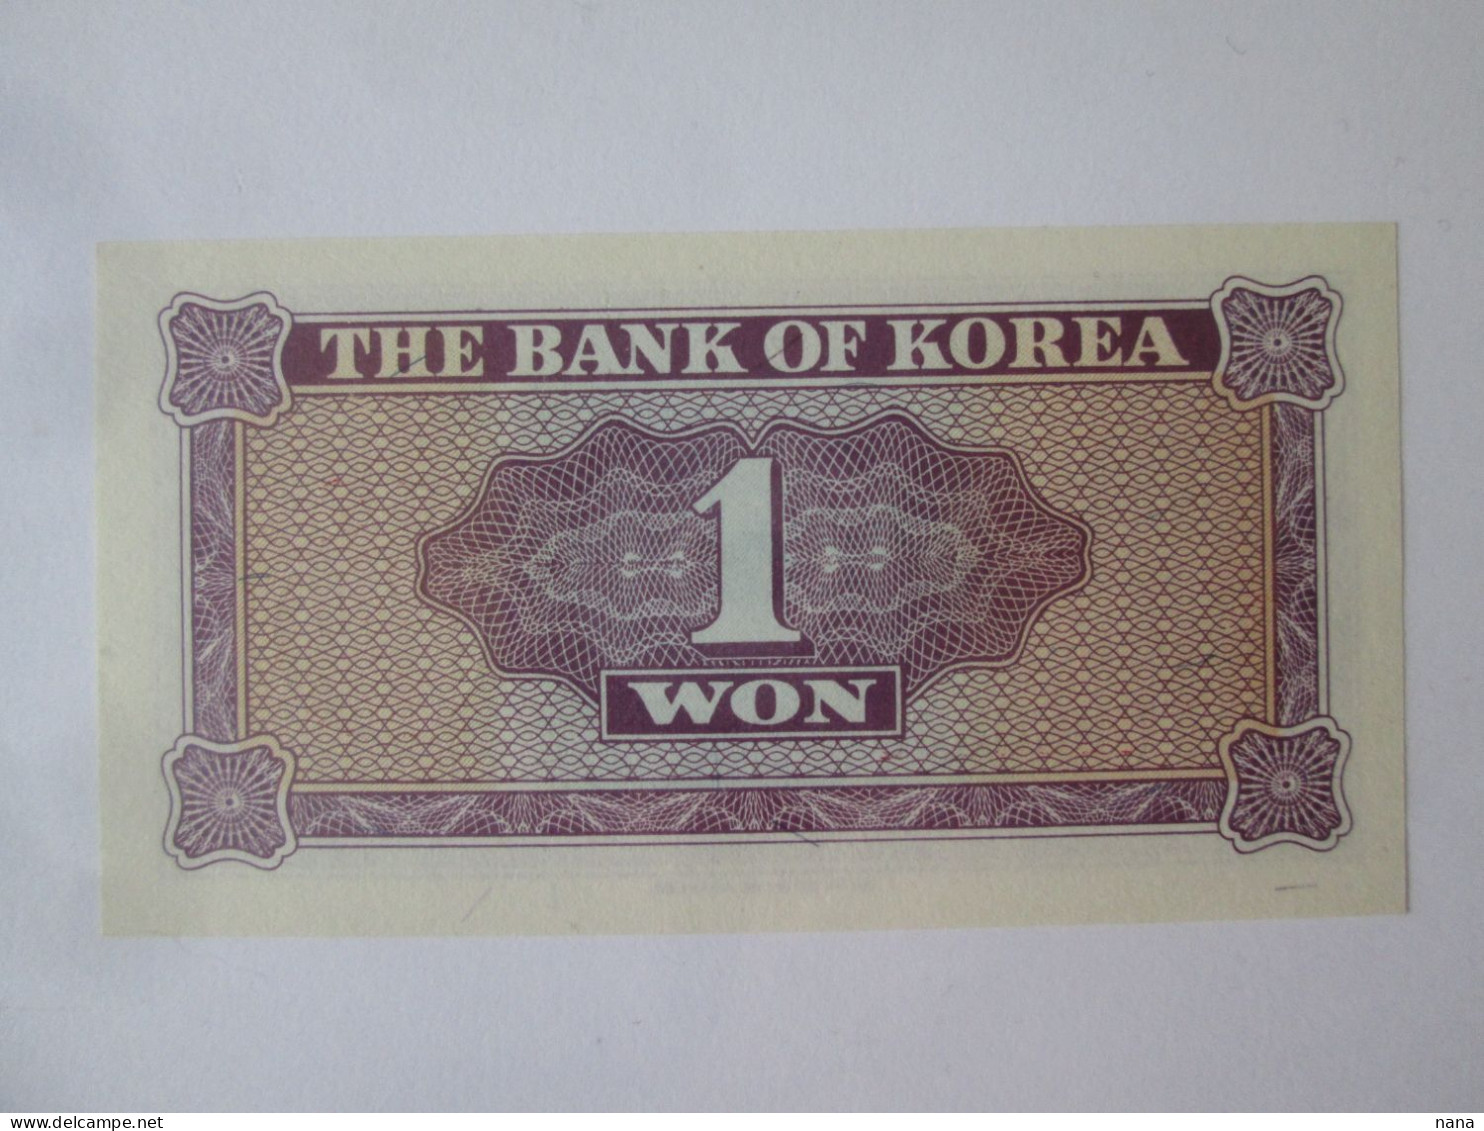 Korea South 1 Won 1962 Billet Neuf/1 Won 1962 UNC Banknote - Korea, South